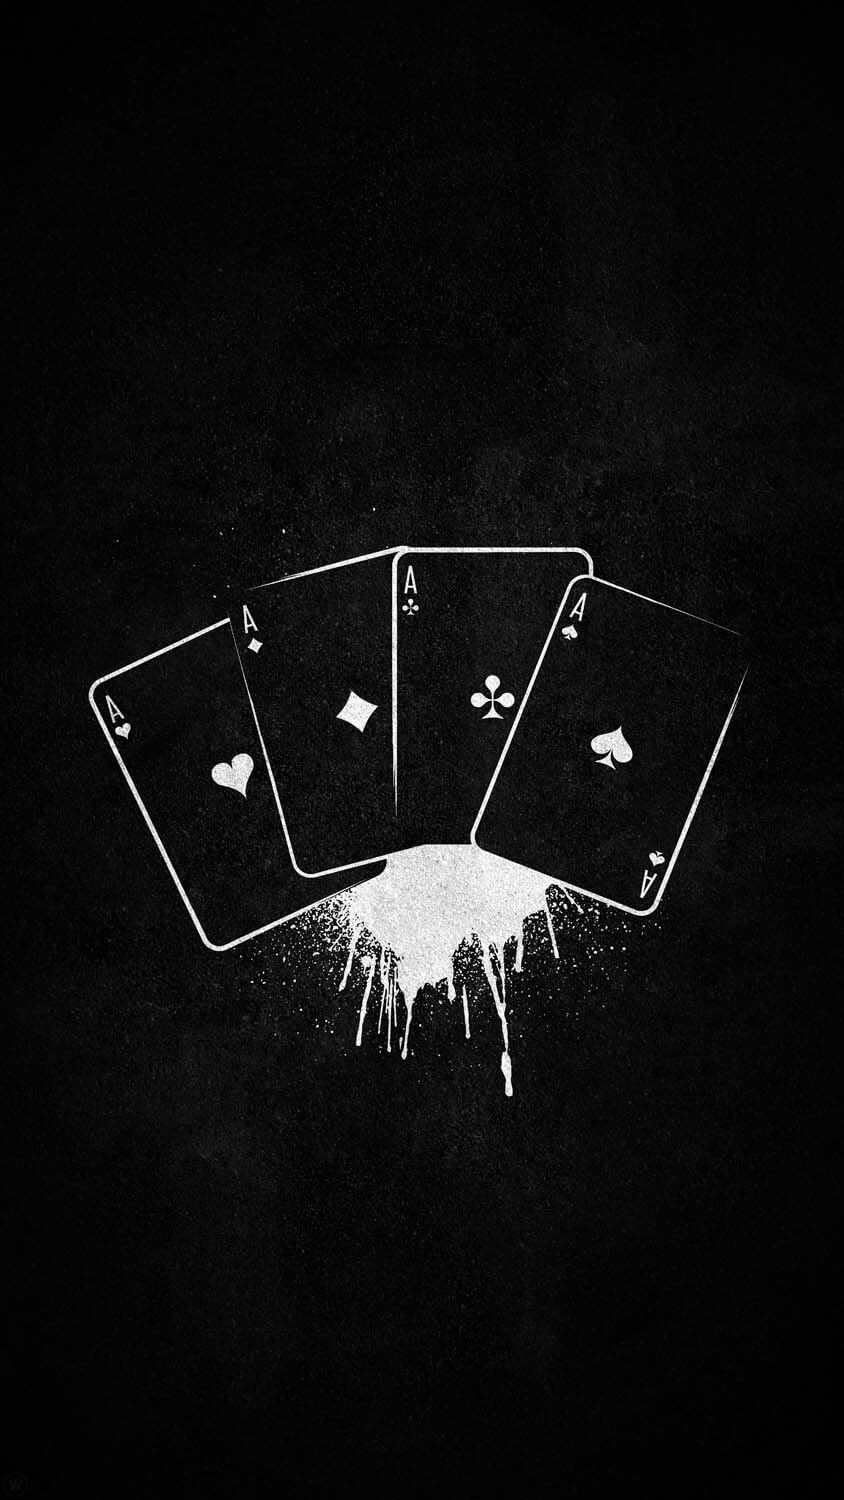 Black Cards iPhone Wallpaper HD